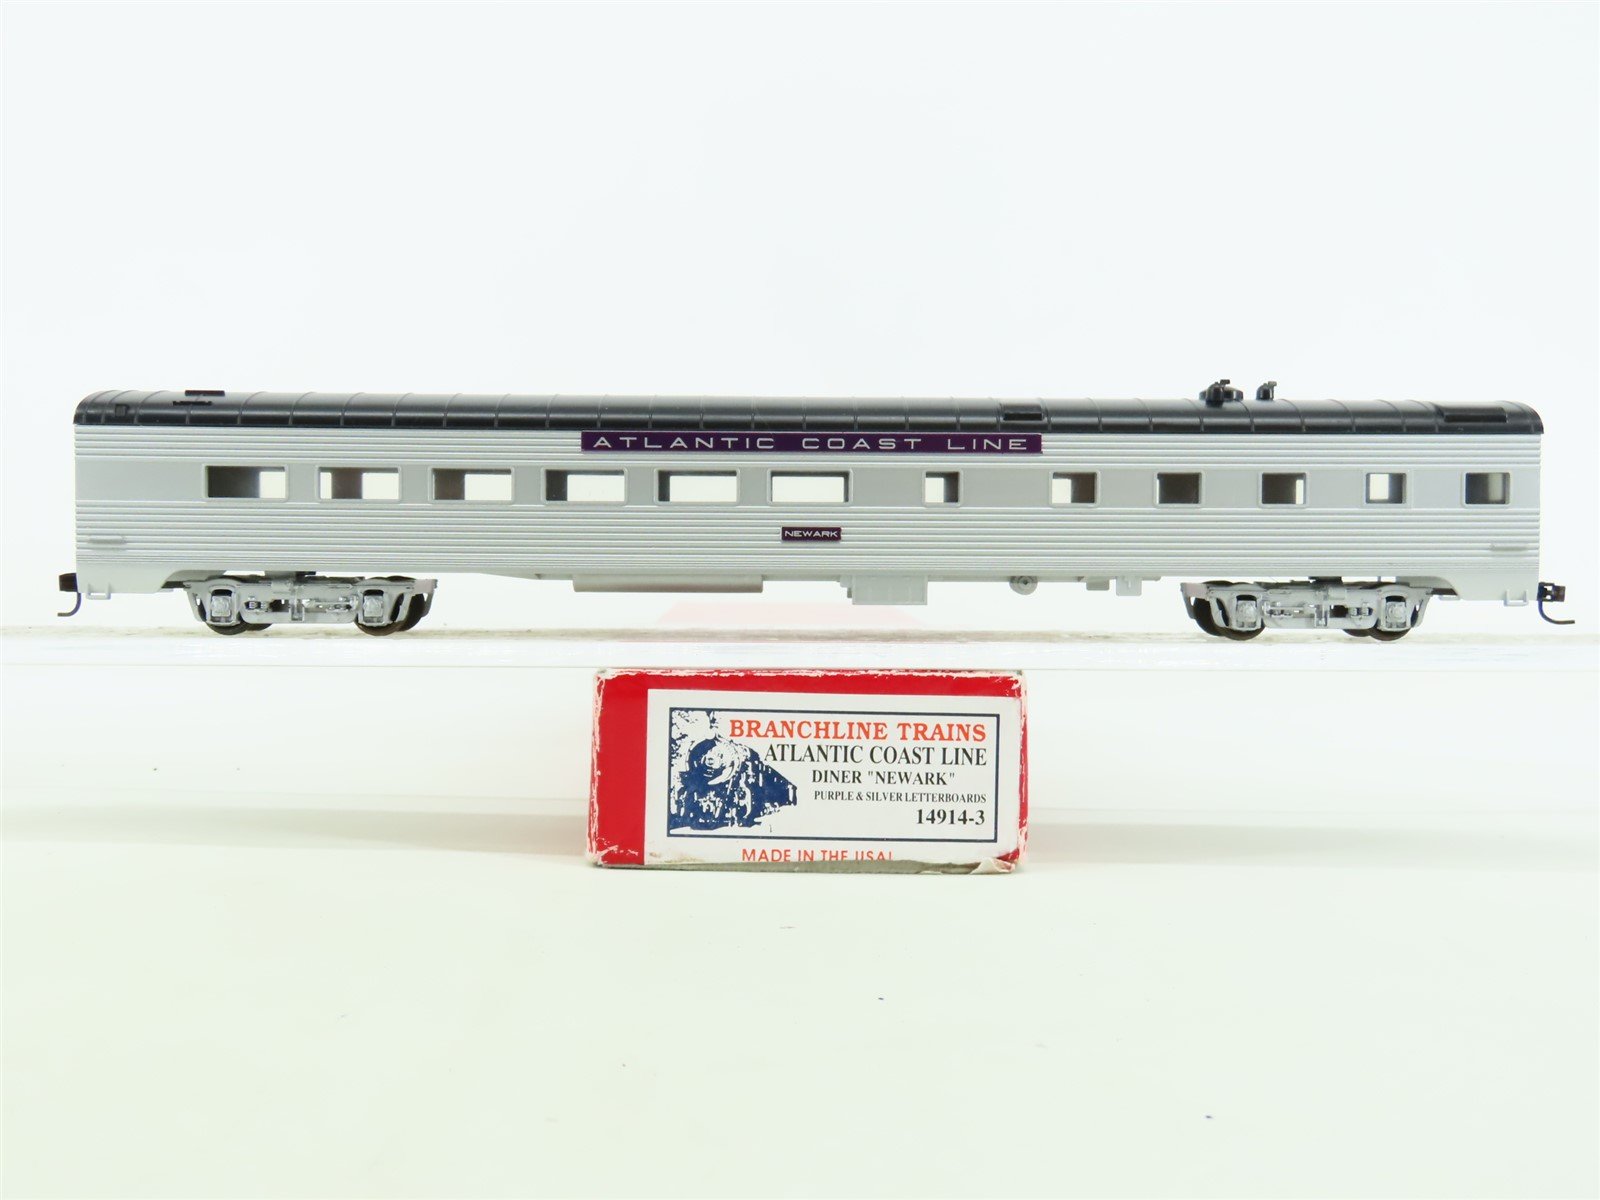 HO Scale Bachmann #46115 AMTK Amtrak Crane Car & Boom Tender - Sealed -  Model Train Market